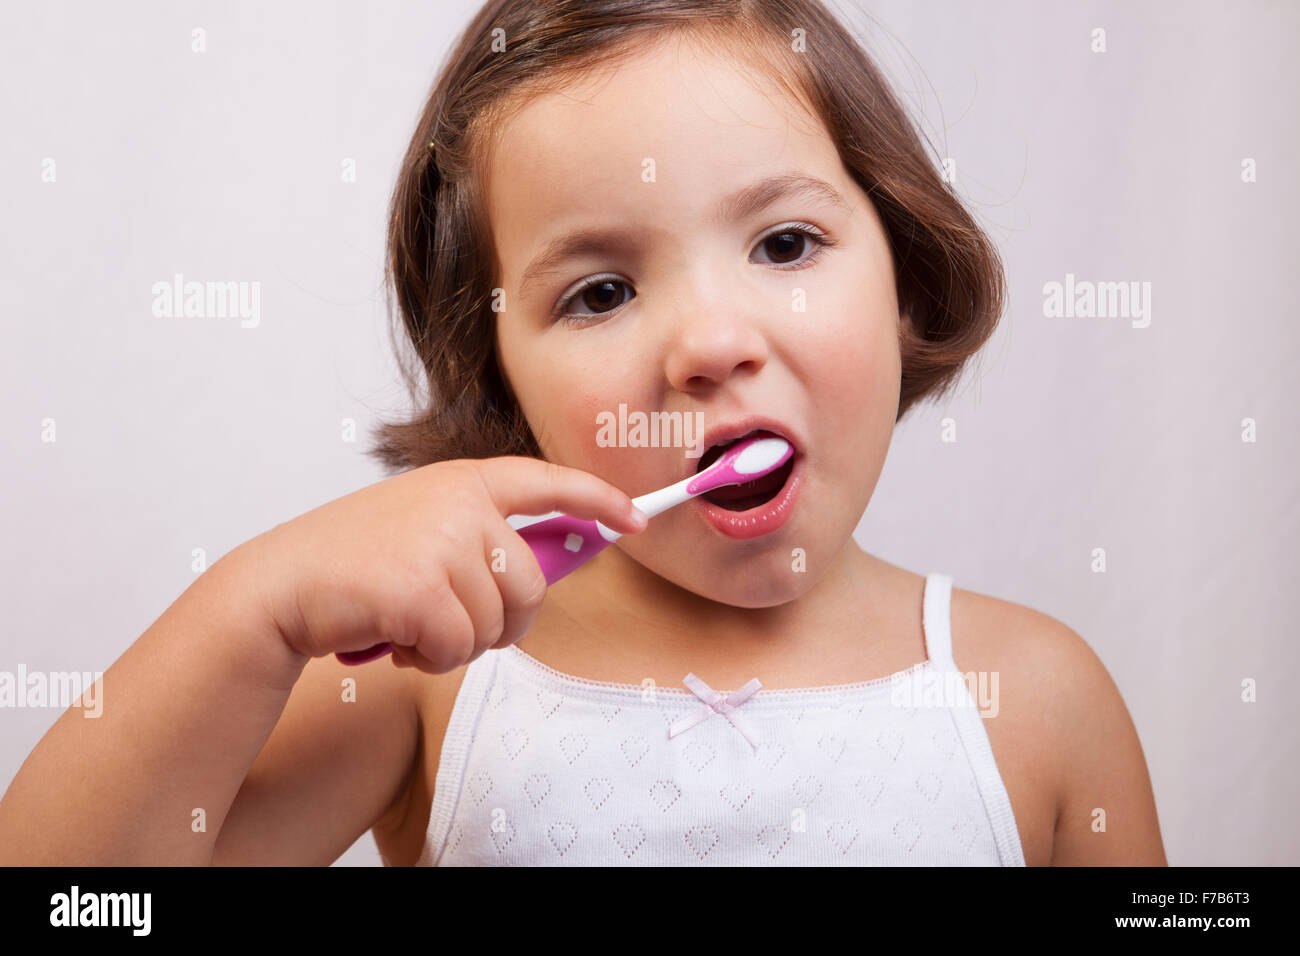 Little brown eye girl brushing her teeth. Isolated over white background Stock Photo